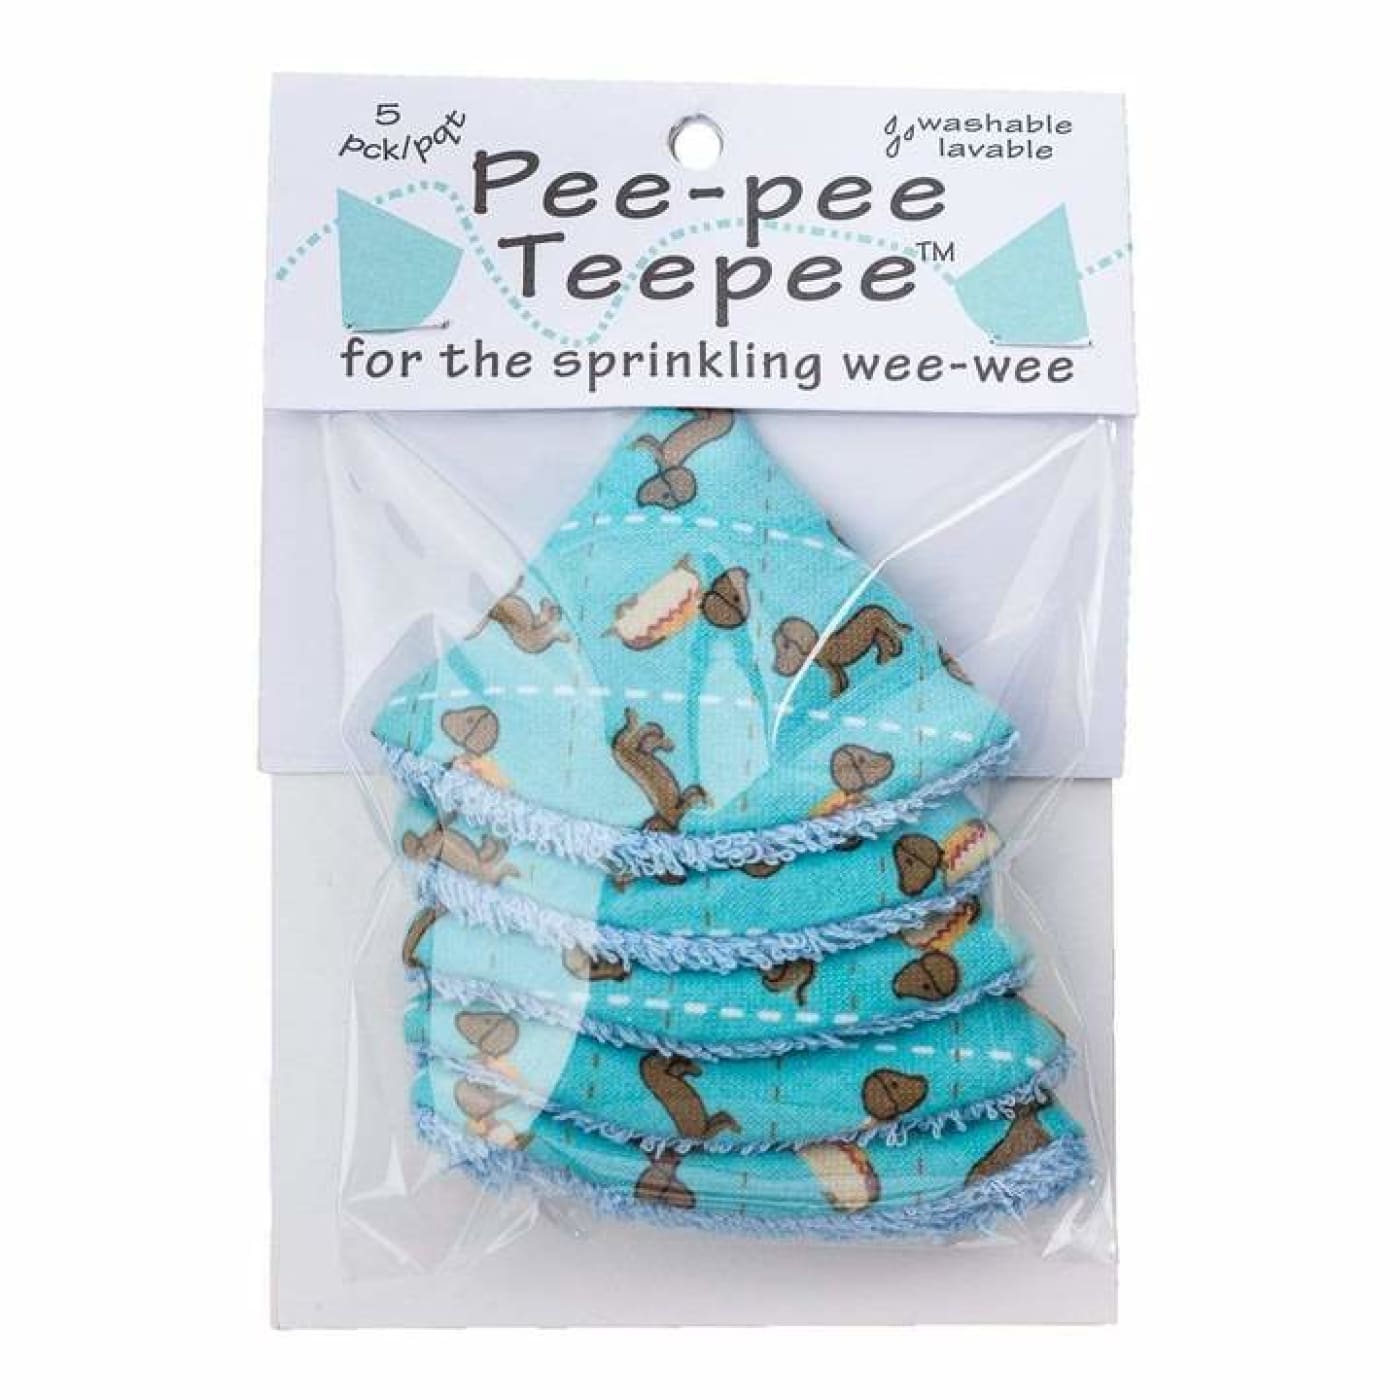 Pee-pee Teepee - Wiener Dog - Wiener Dog - BATHTIME & CHANGING - NAPPIES/WIPES/ACCESSORIES